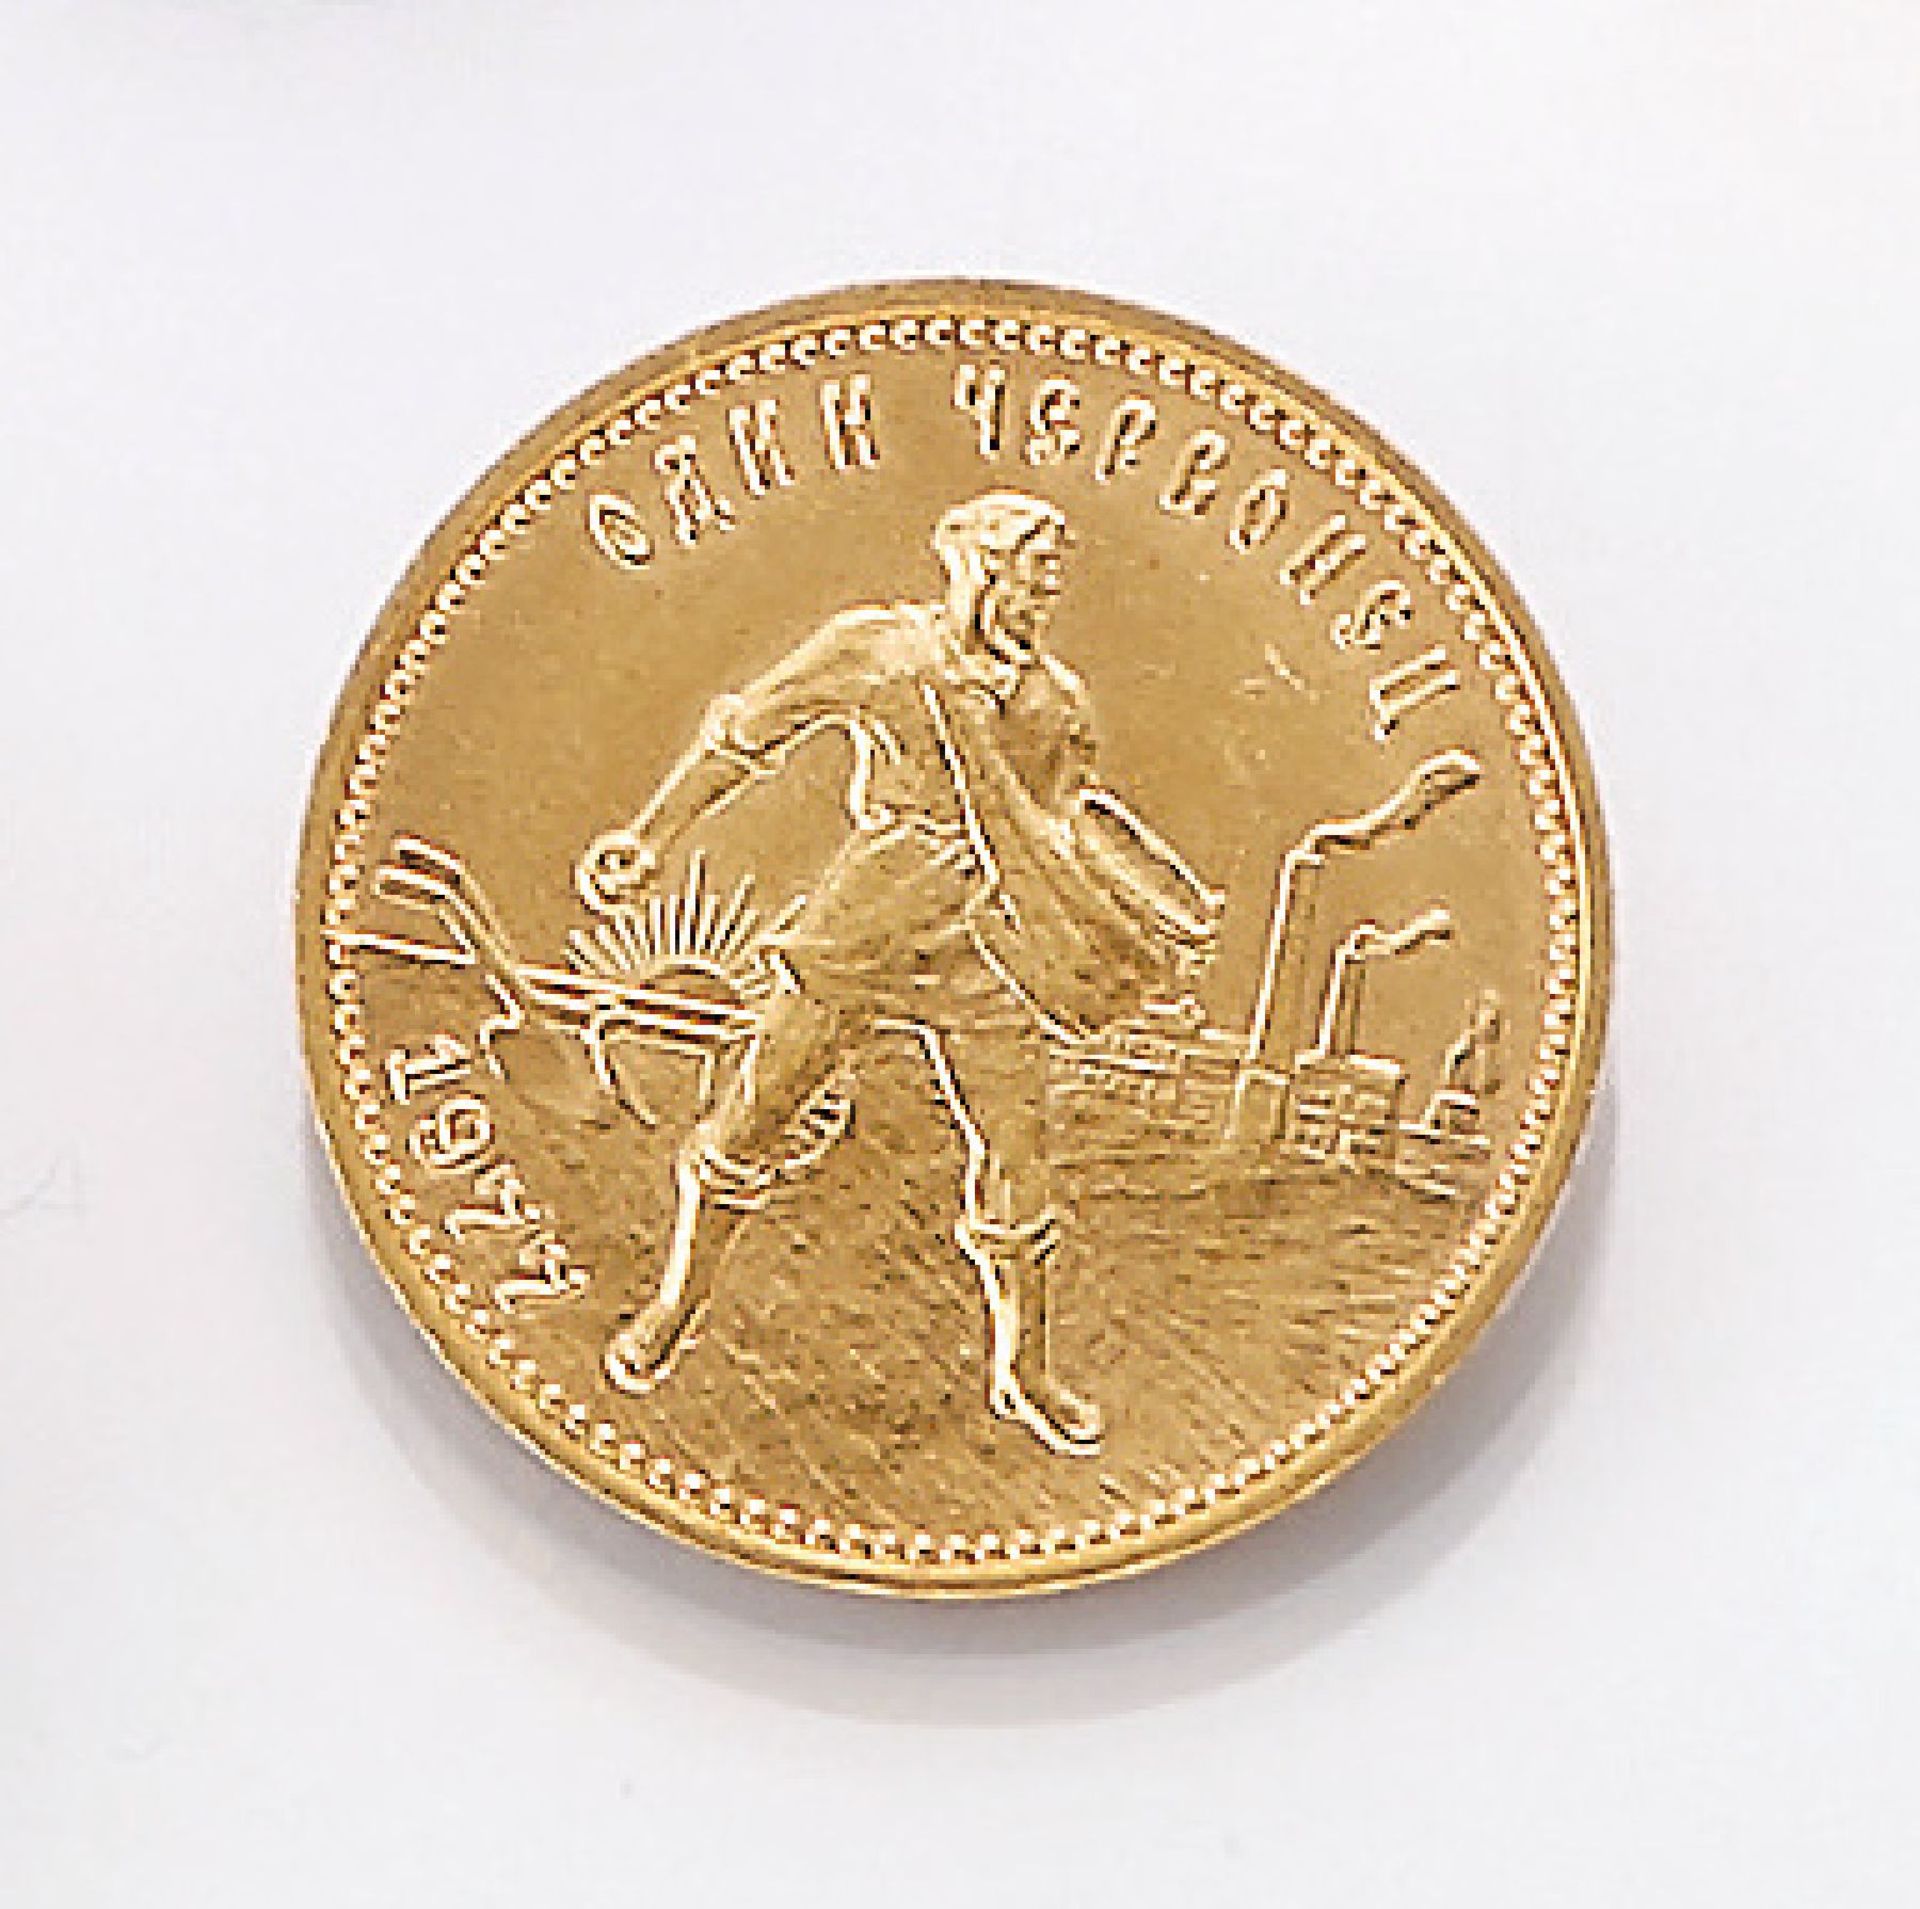 Gold coin, 10 ruble, 1 Tscherwonez , Russia,1977